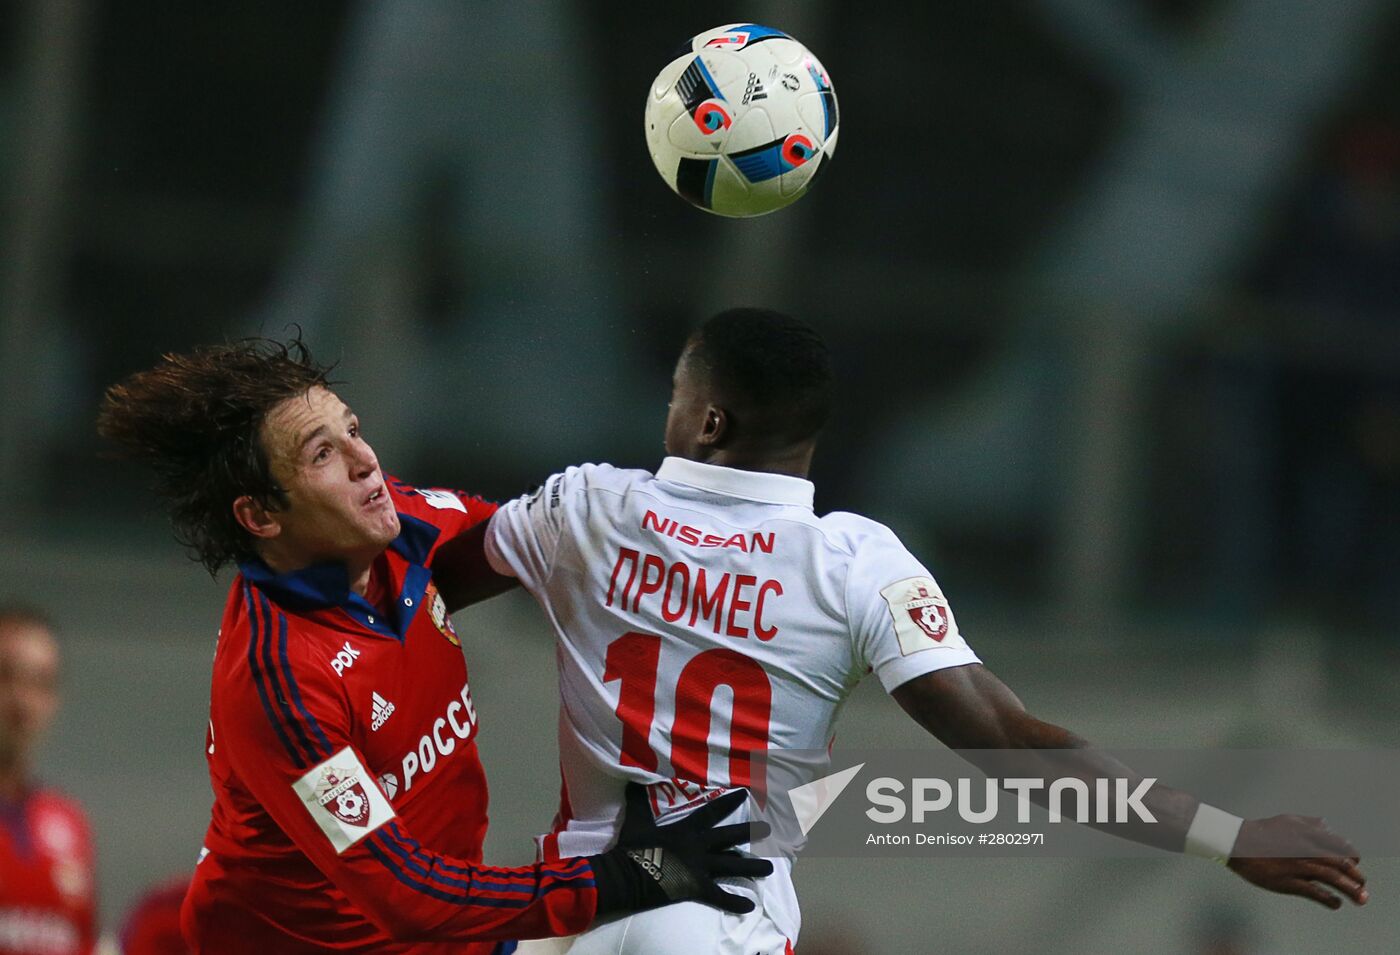 Russian Football Premier League. CSKA vs. Spartak